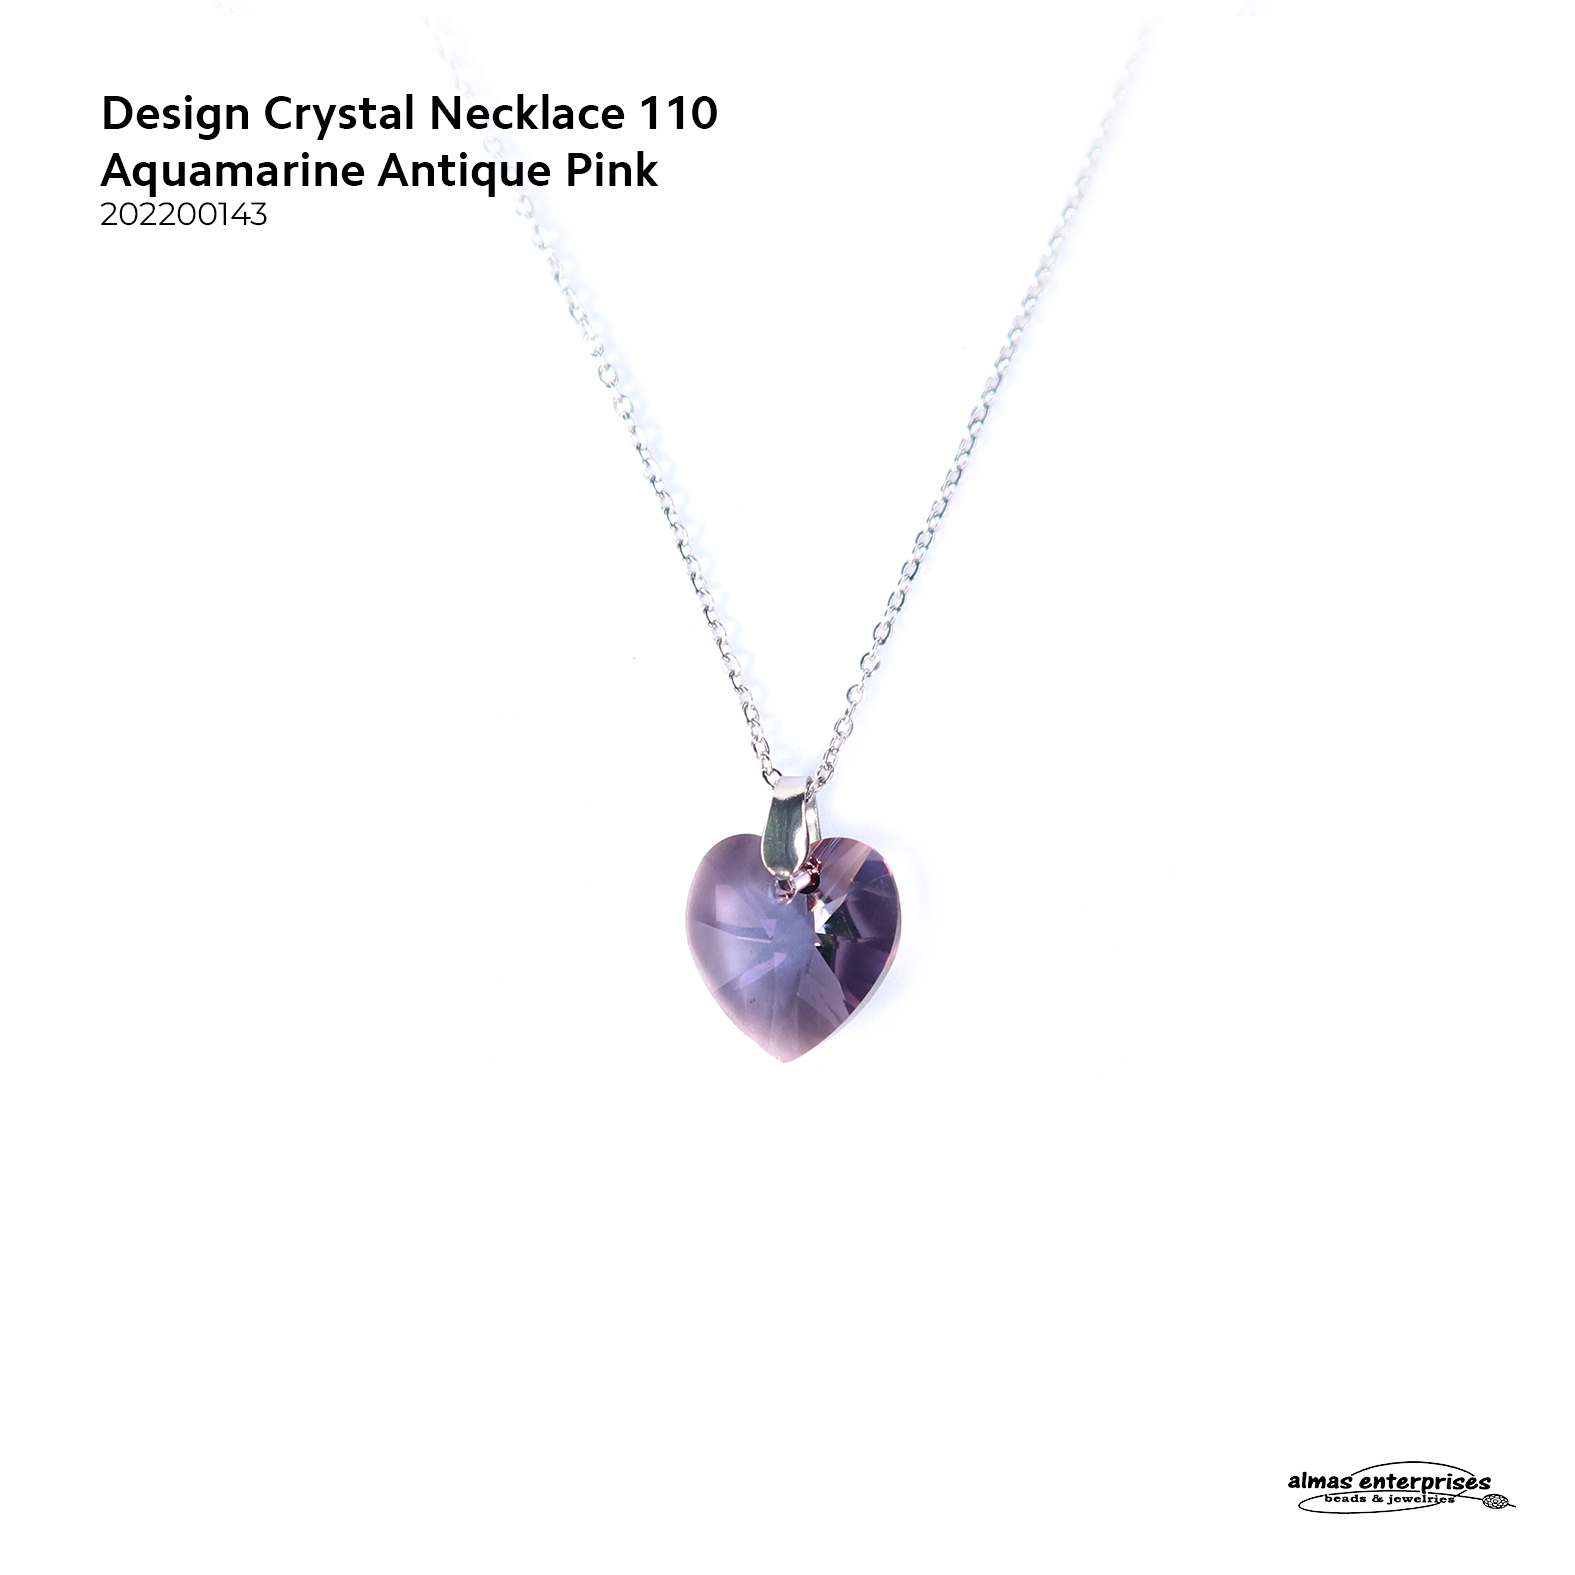 Design Crystal Necklace 110